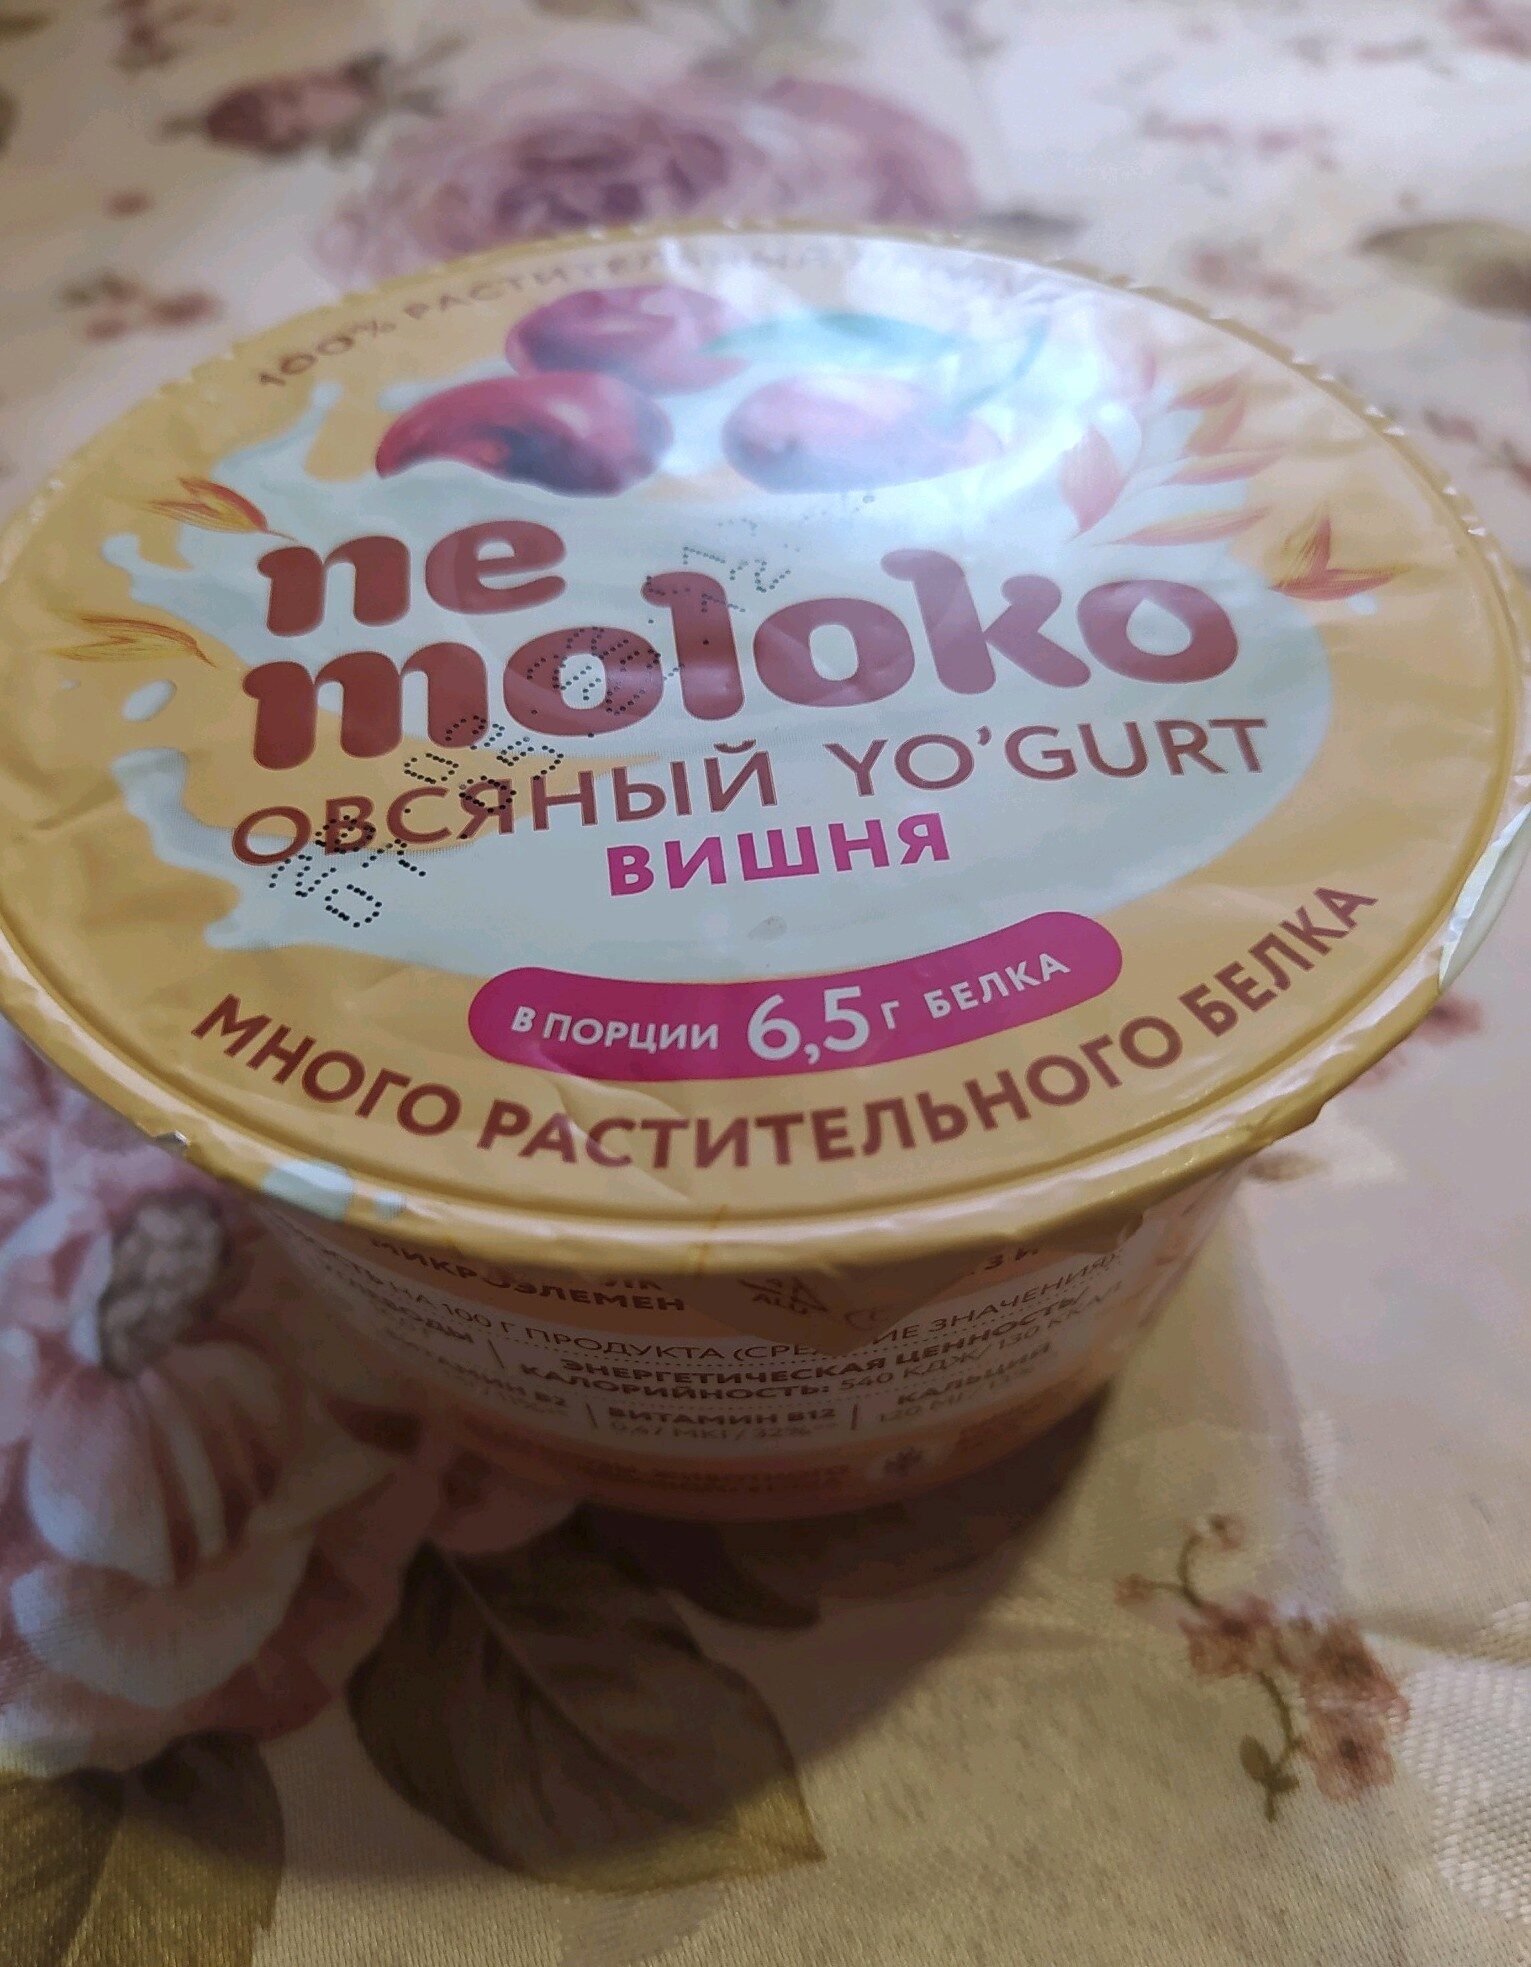 Nemoloko овсяный yo'gurt вишня - Produkt - ru